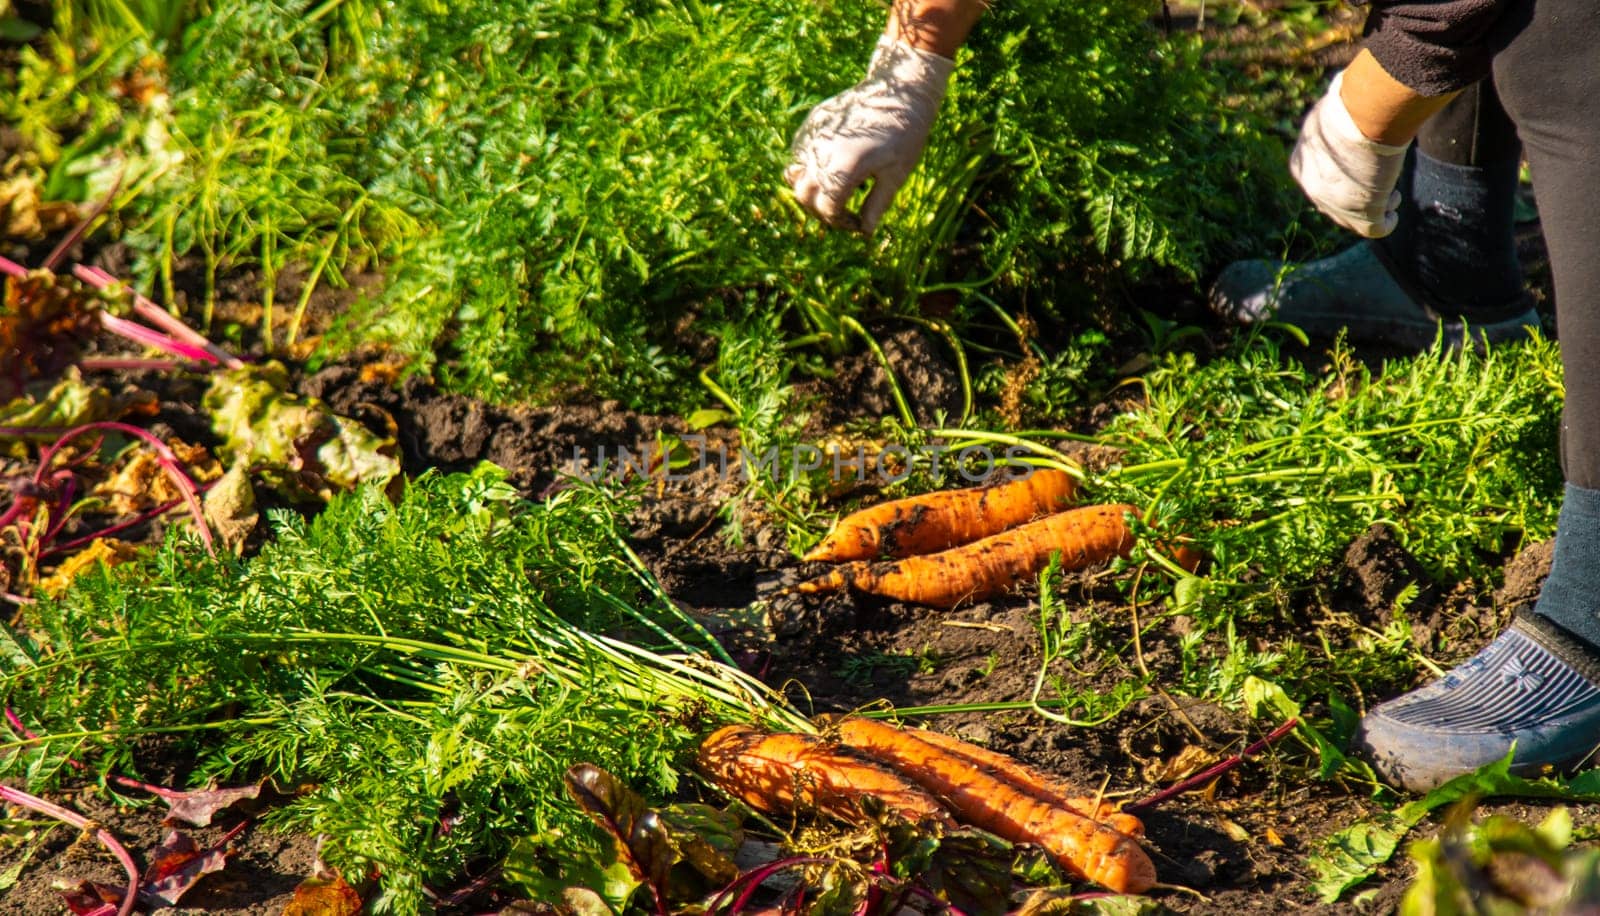 Carrot harvest in the garden. Selective focus. by yanadjana